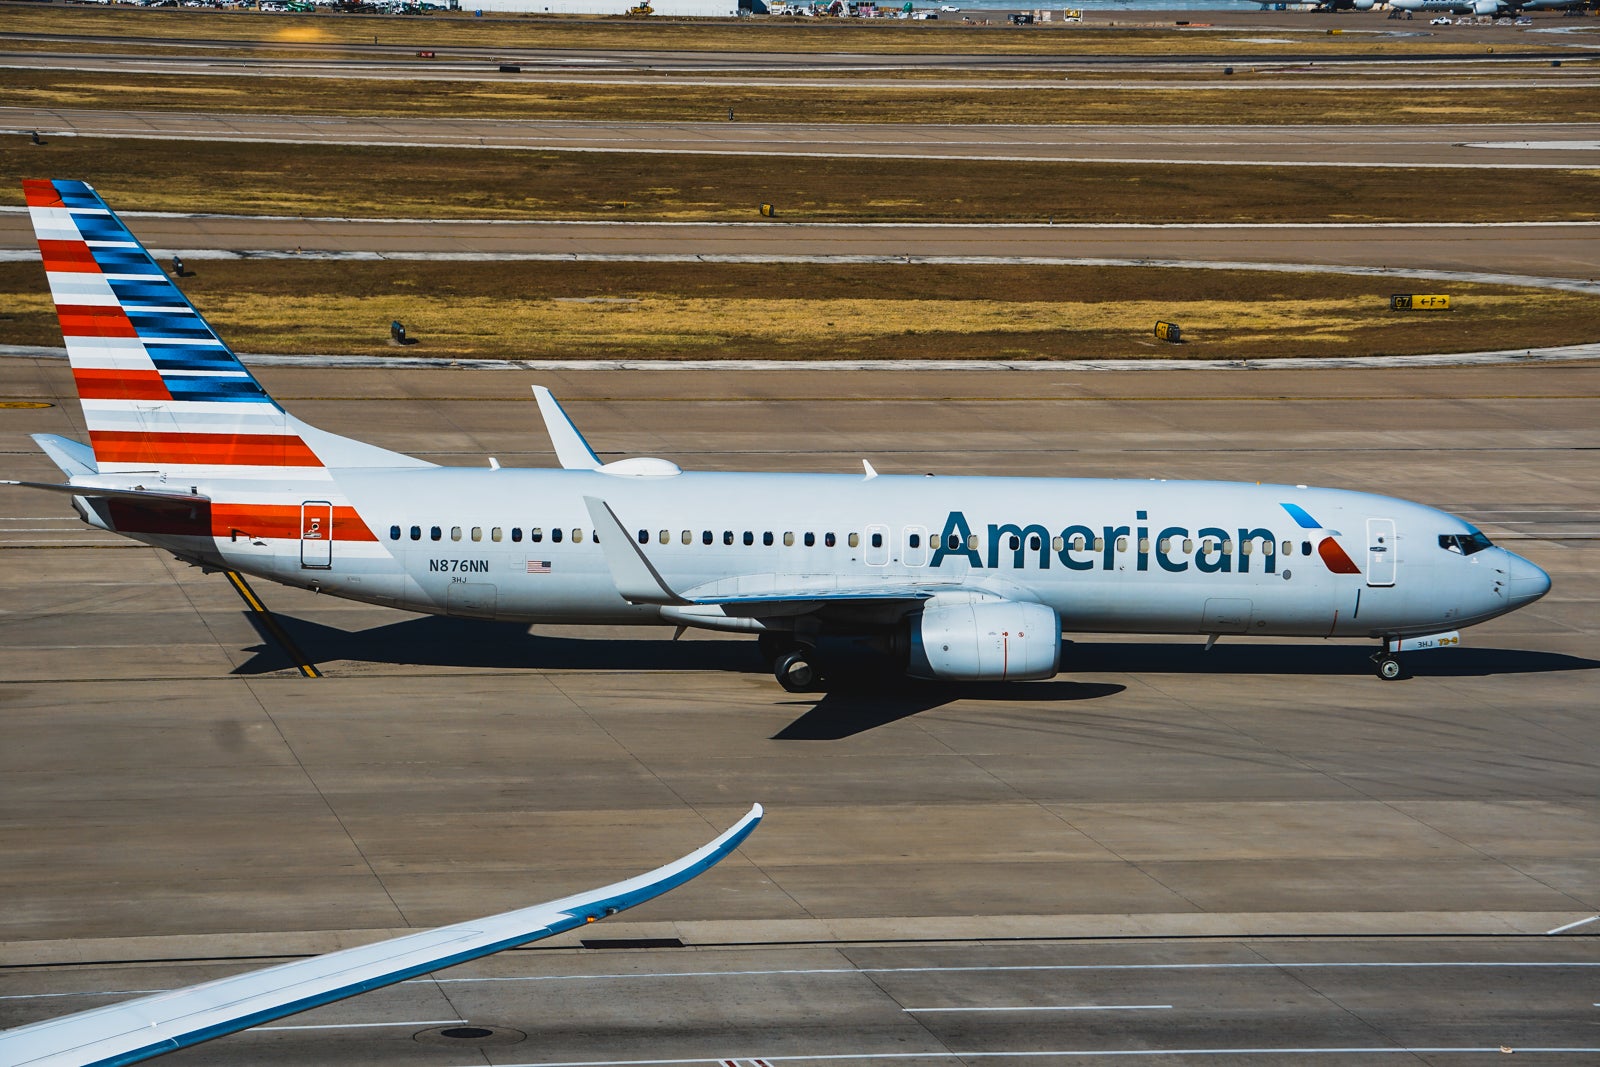 20191028_DFW Airport_American Airlines 737-800 at DFW_JTGenter